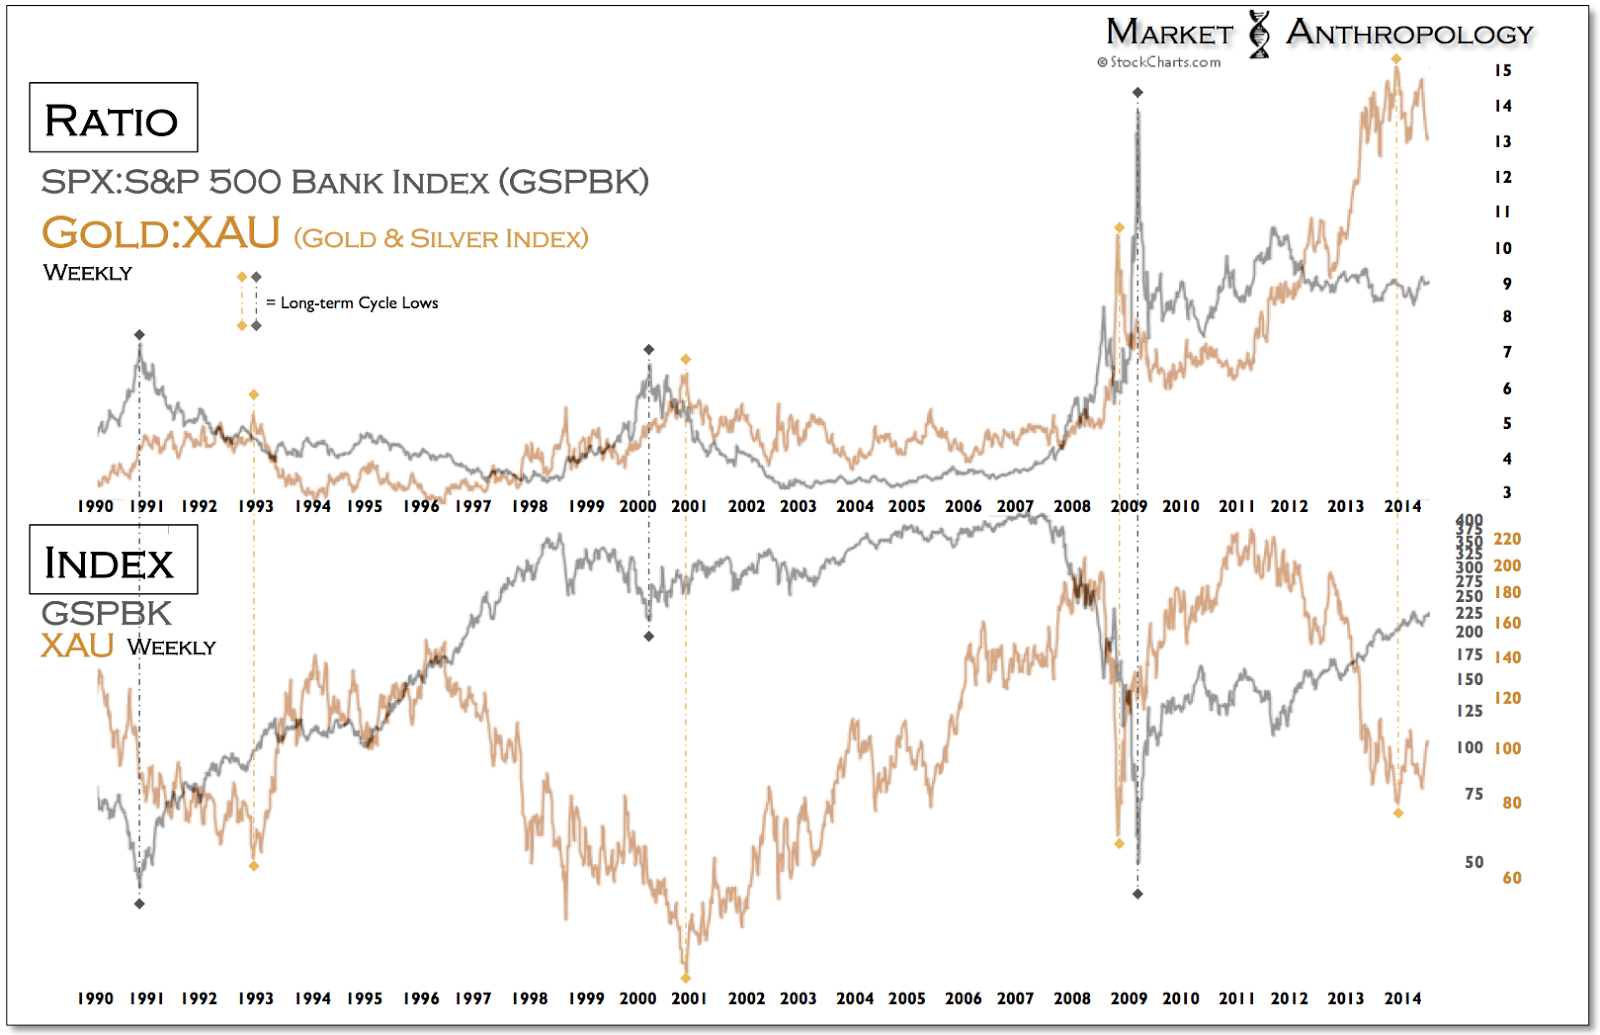 SPX:S&P Bank Index vs Gold:XAU Weekly/Banks:XAU Weekly